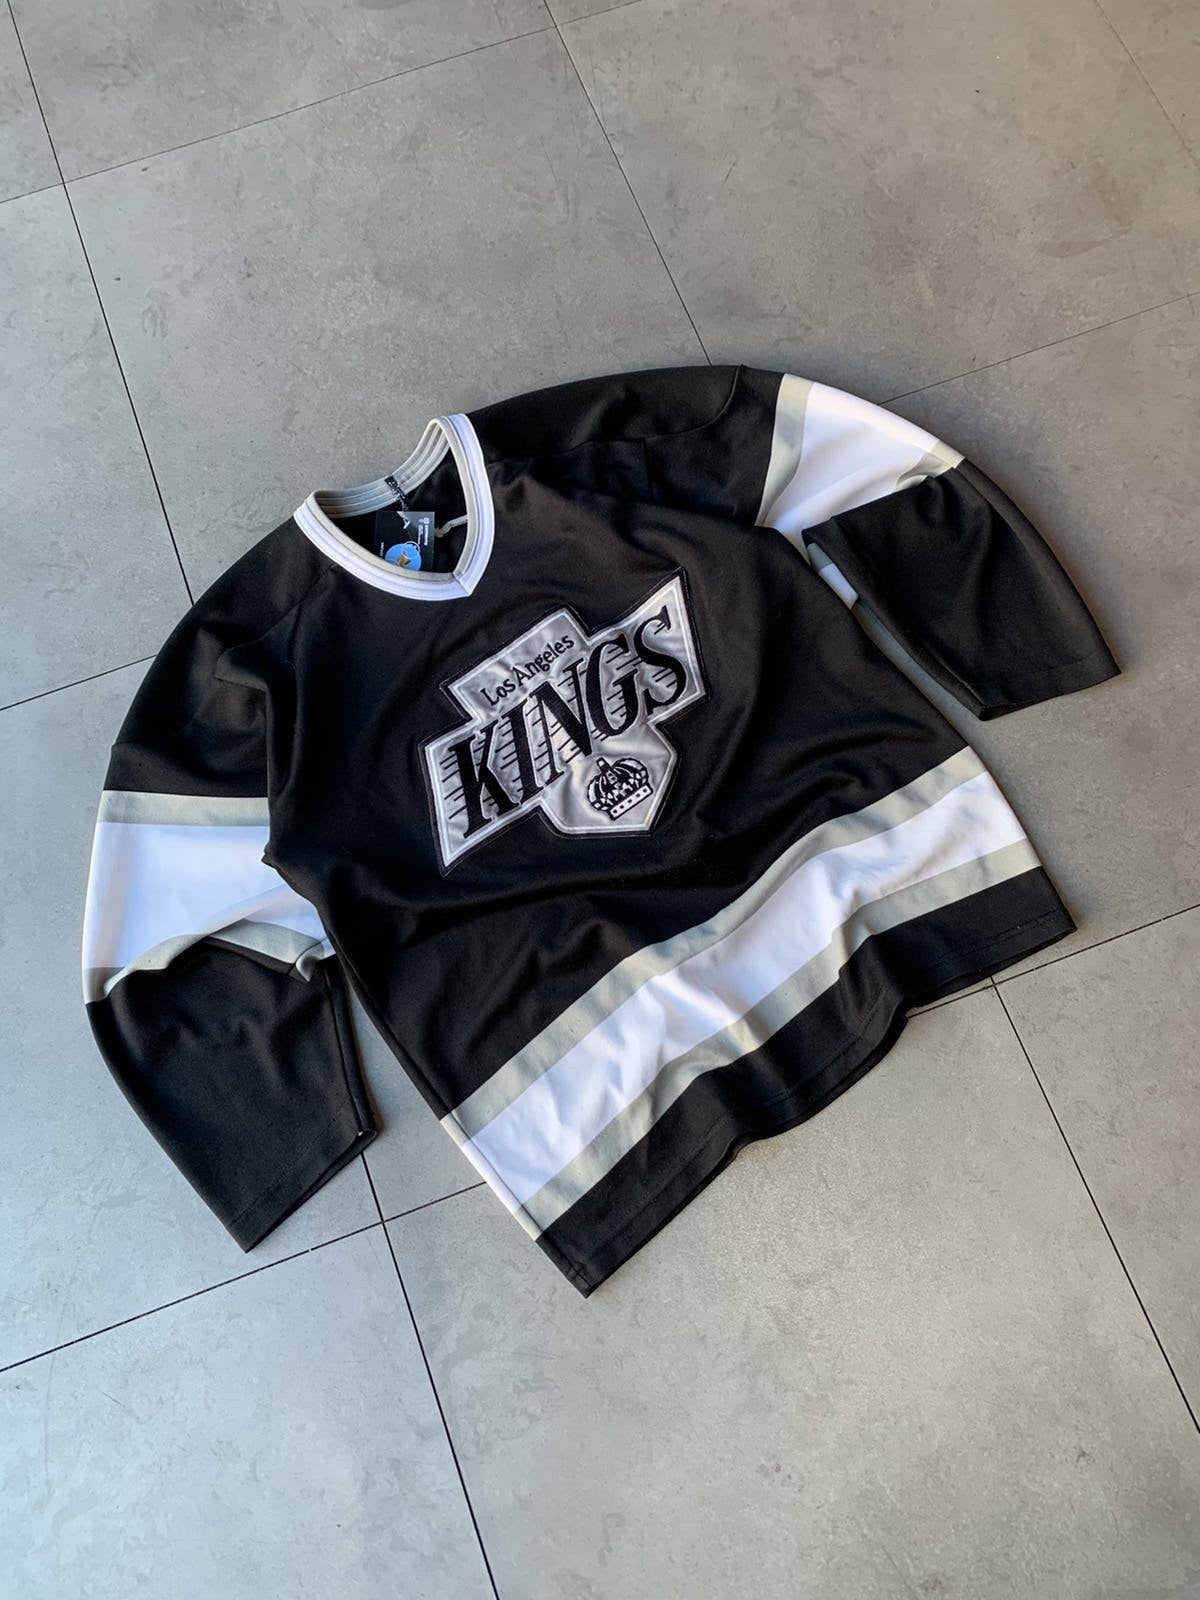 Vintage La King CCM Hockey Jersey